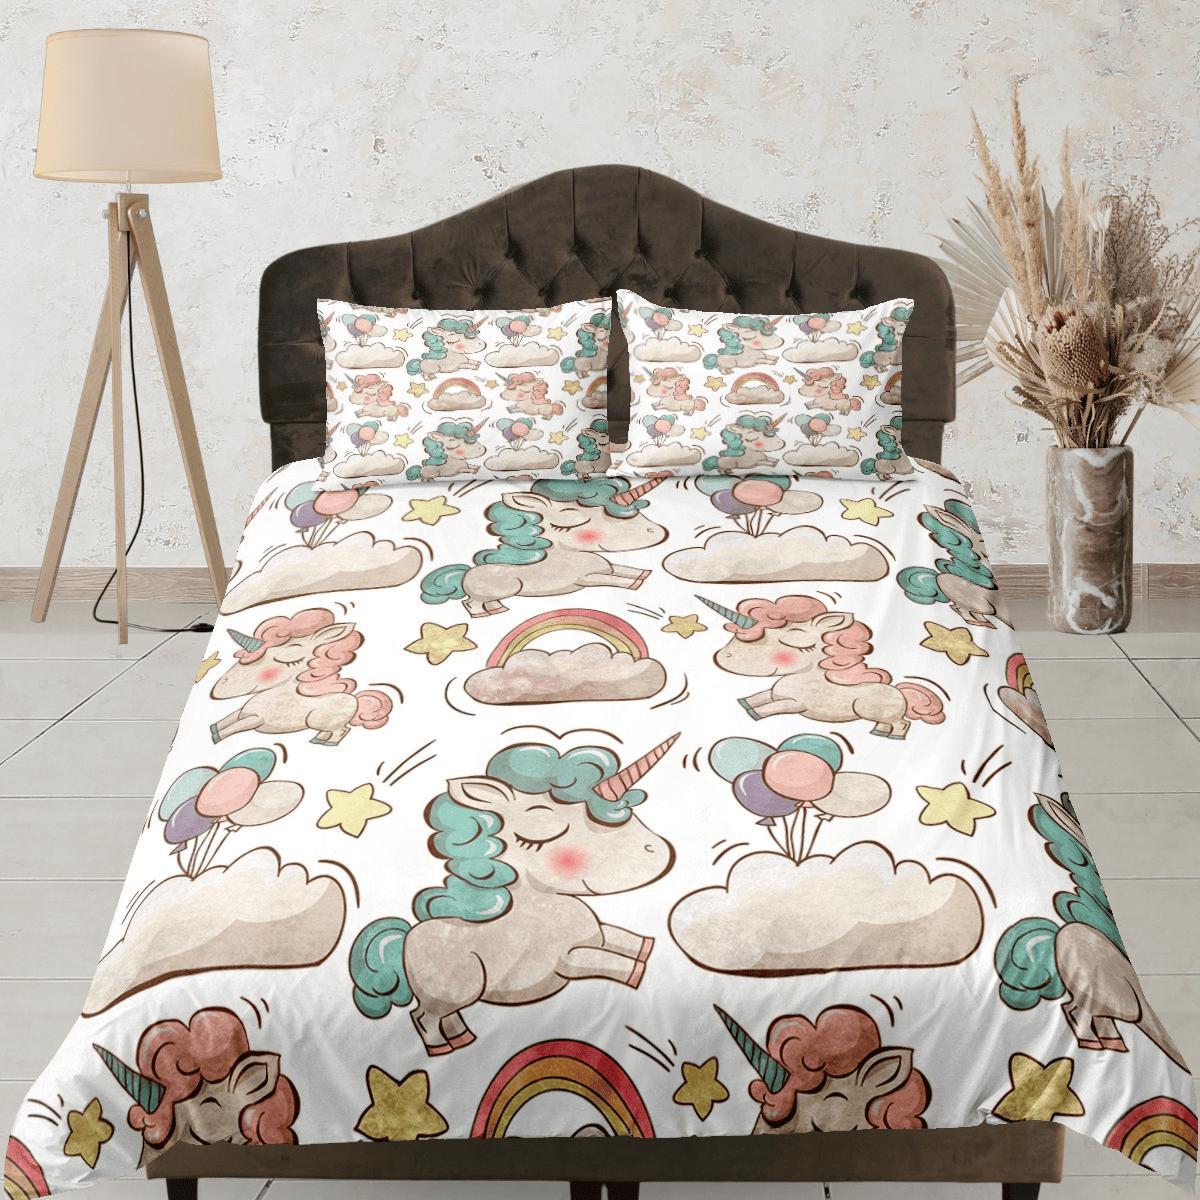 daintyduvet Unicorn White Duvet Cover Set Cute Bedspread, Animal Dorm Bedding with Pillowcase